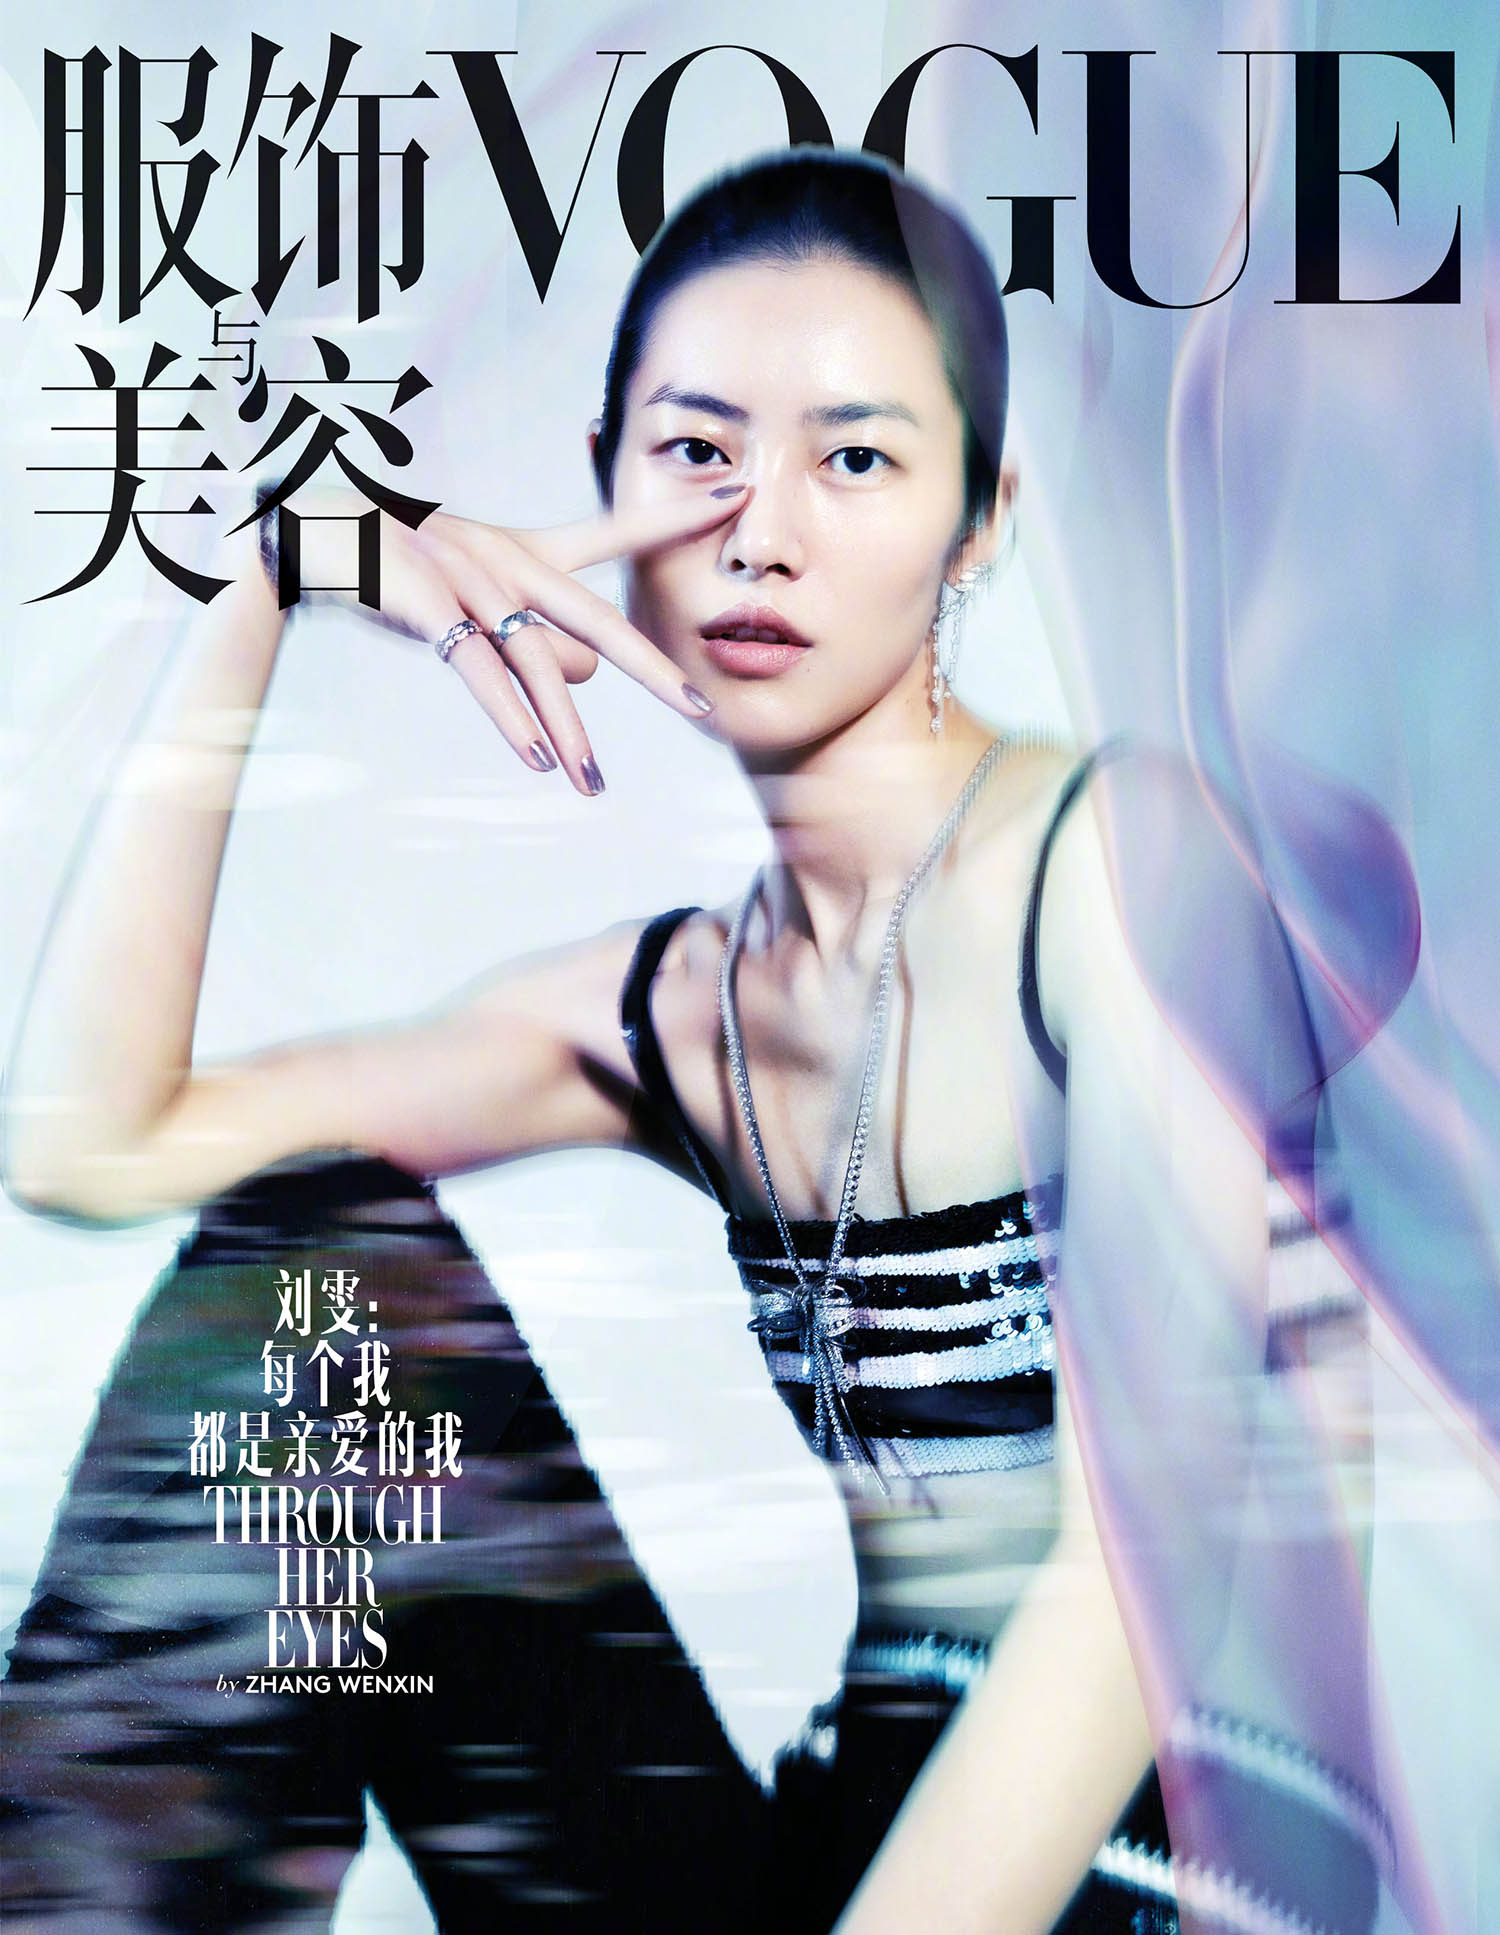 Liu Wen on Vogue China November 2020 by six female photographers